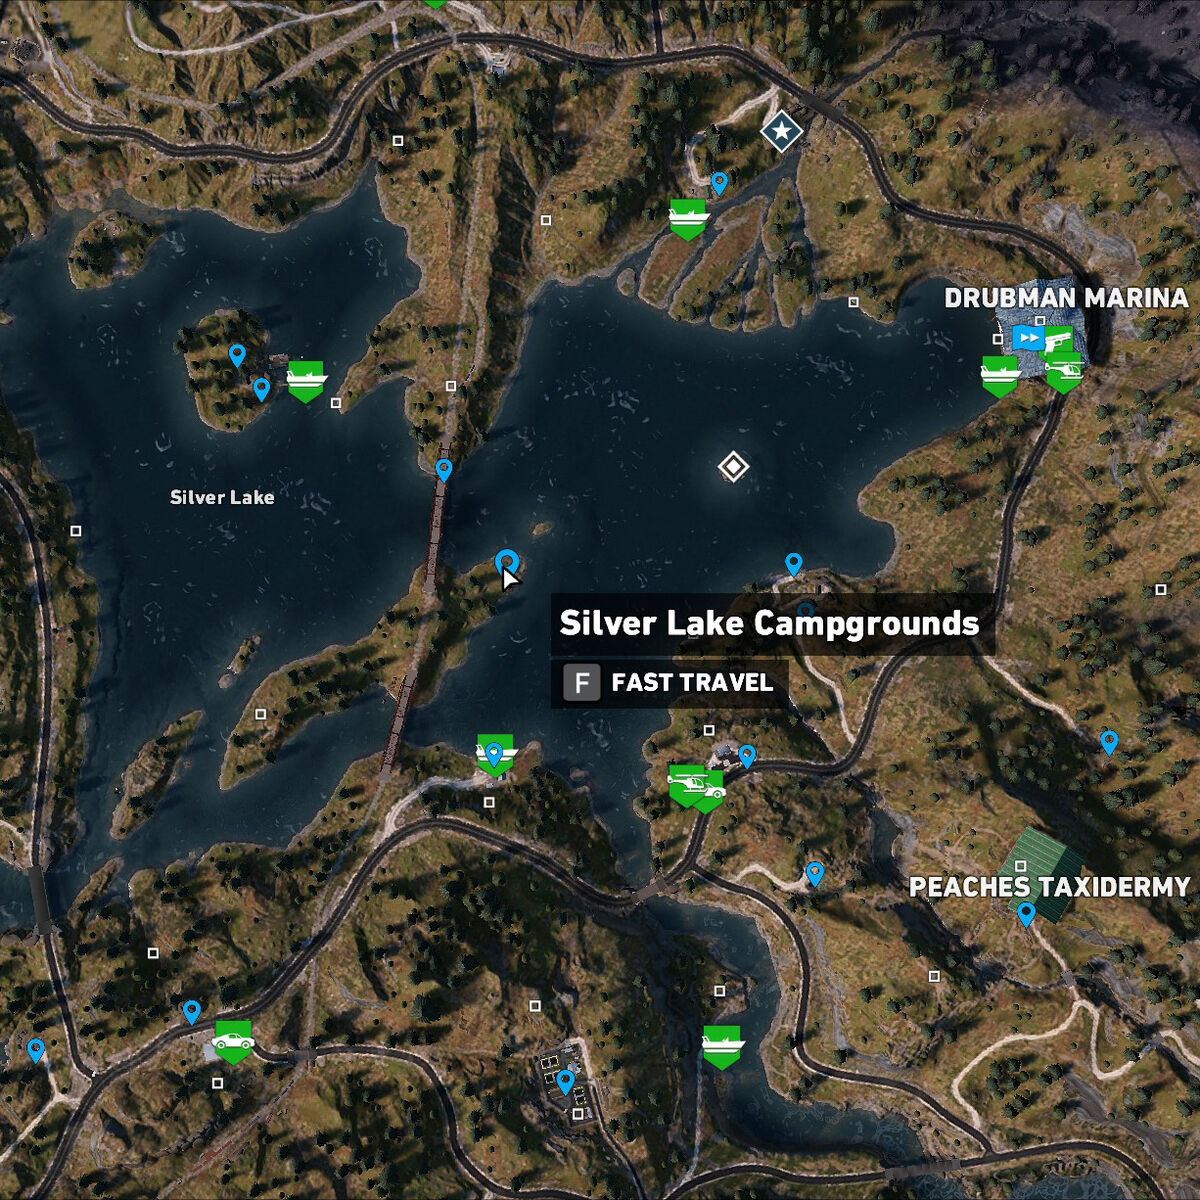 Far Cry 5 Interactive Map